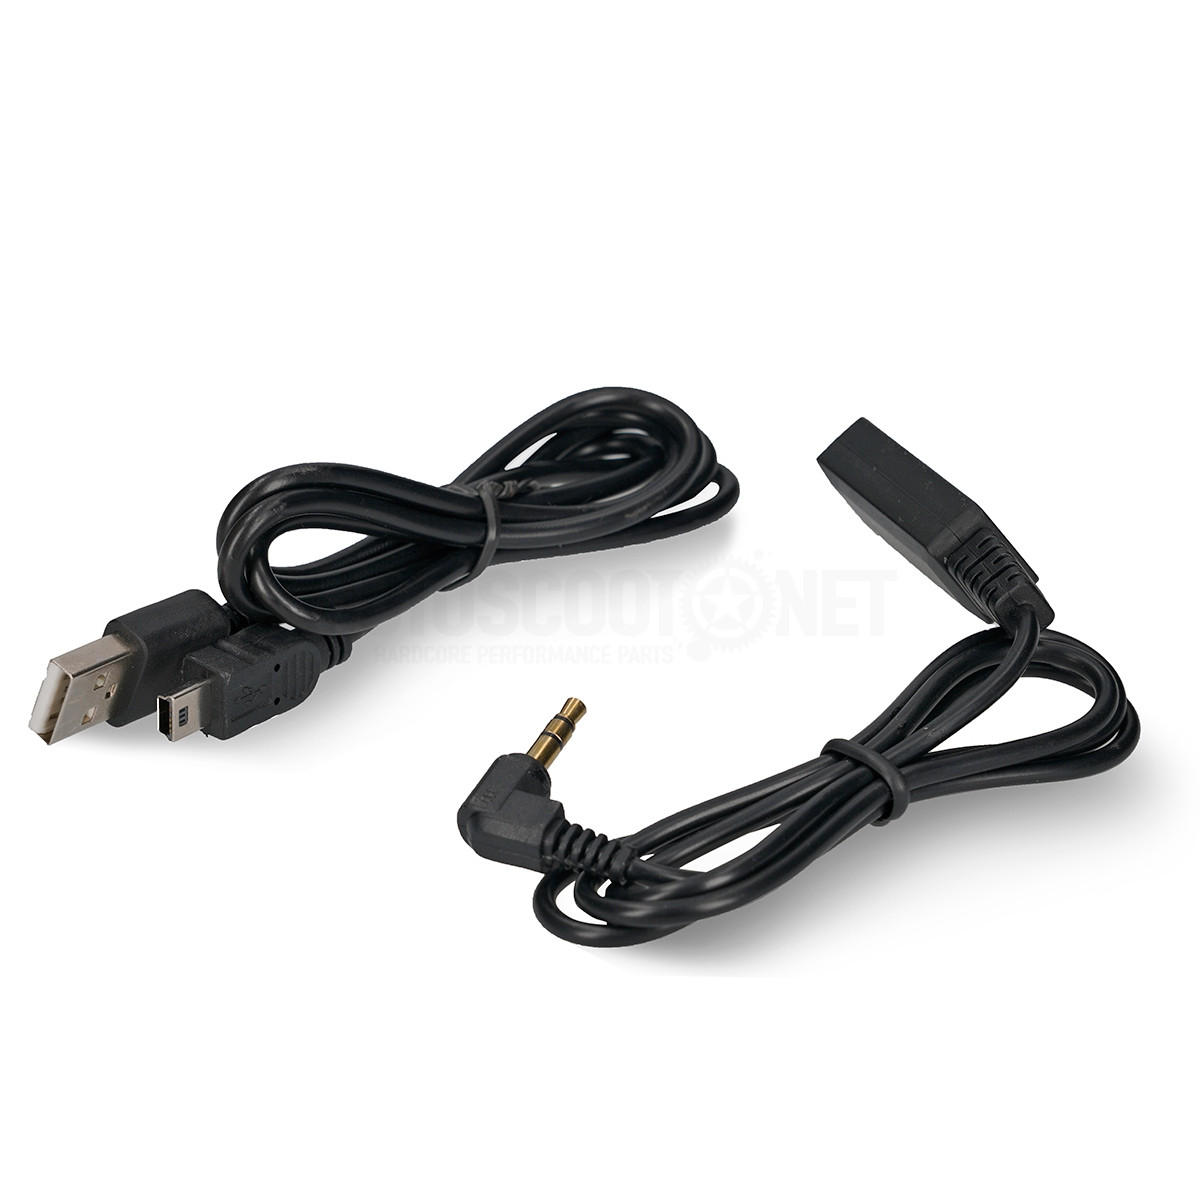 Laptimer VOCA Eagle Eye pantalla 2.2 conexión USB kit plug & play ref: VCR-RD11LAP/EGL